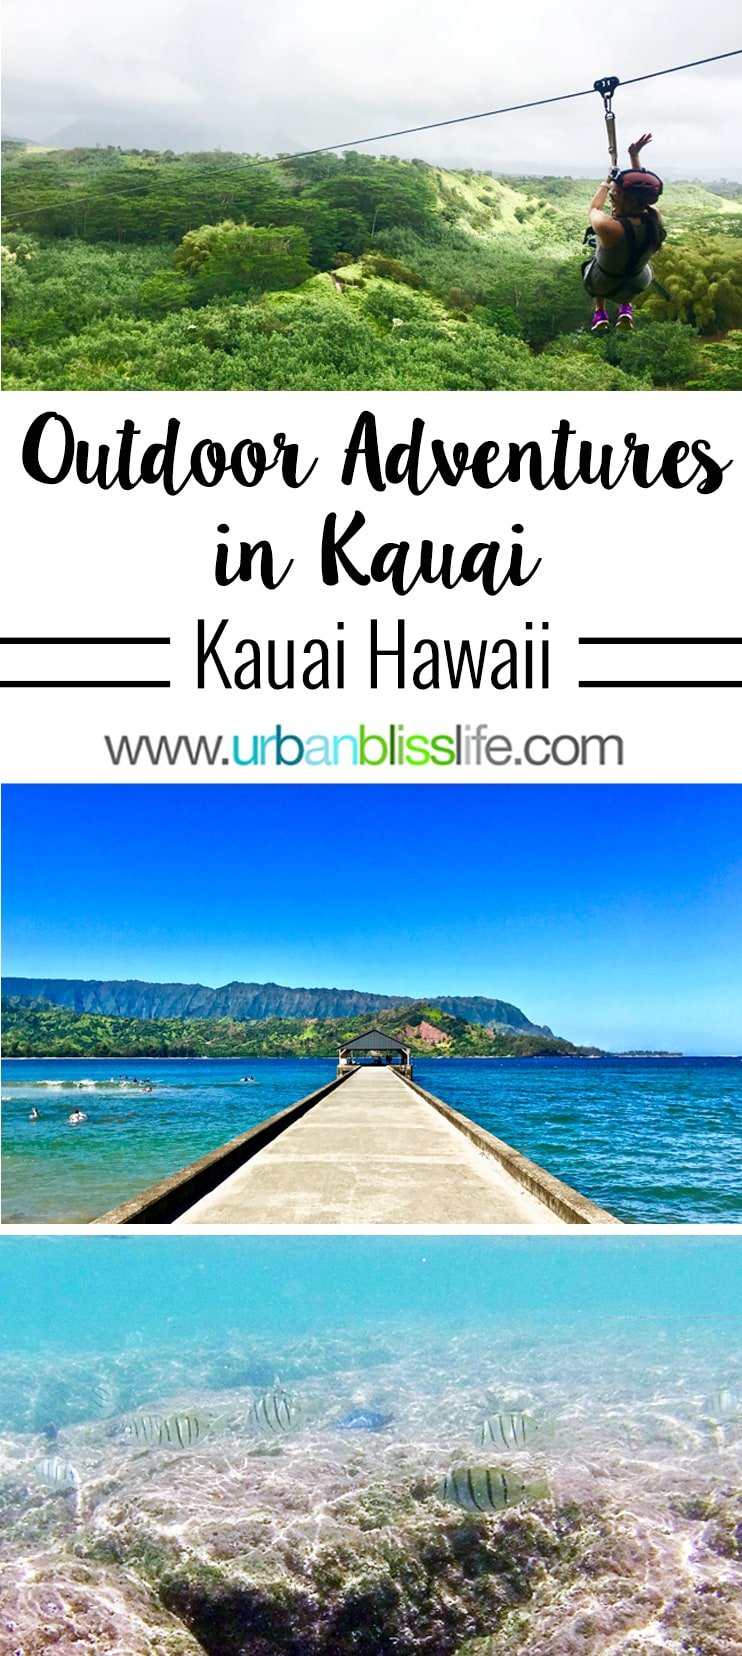 Kauai Outdoor Adventures on UrbanBlissLife.com - kayaking and snorkeling